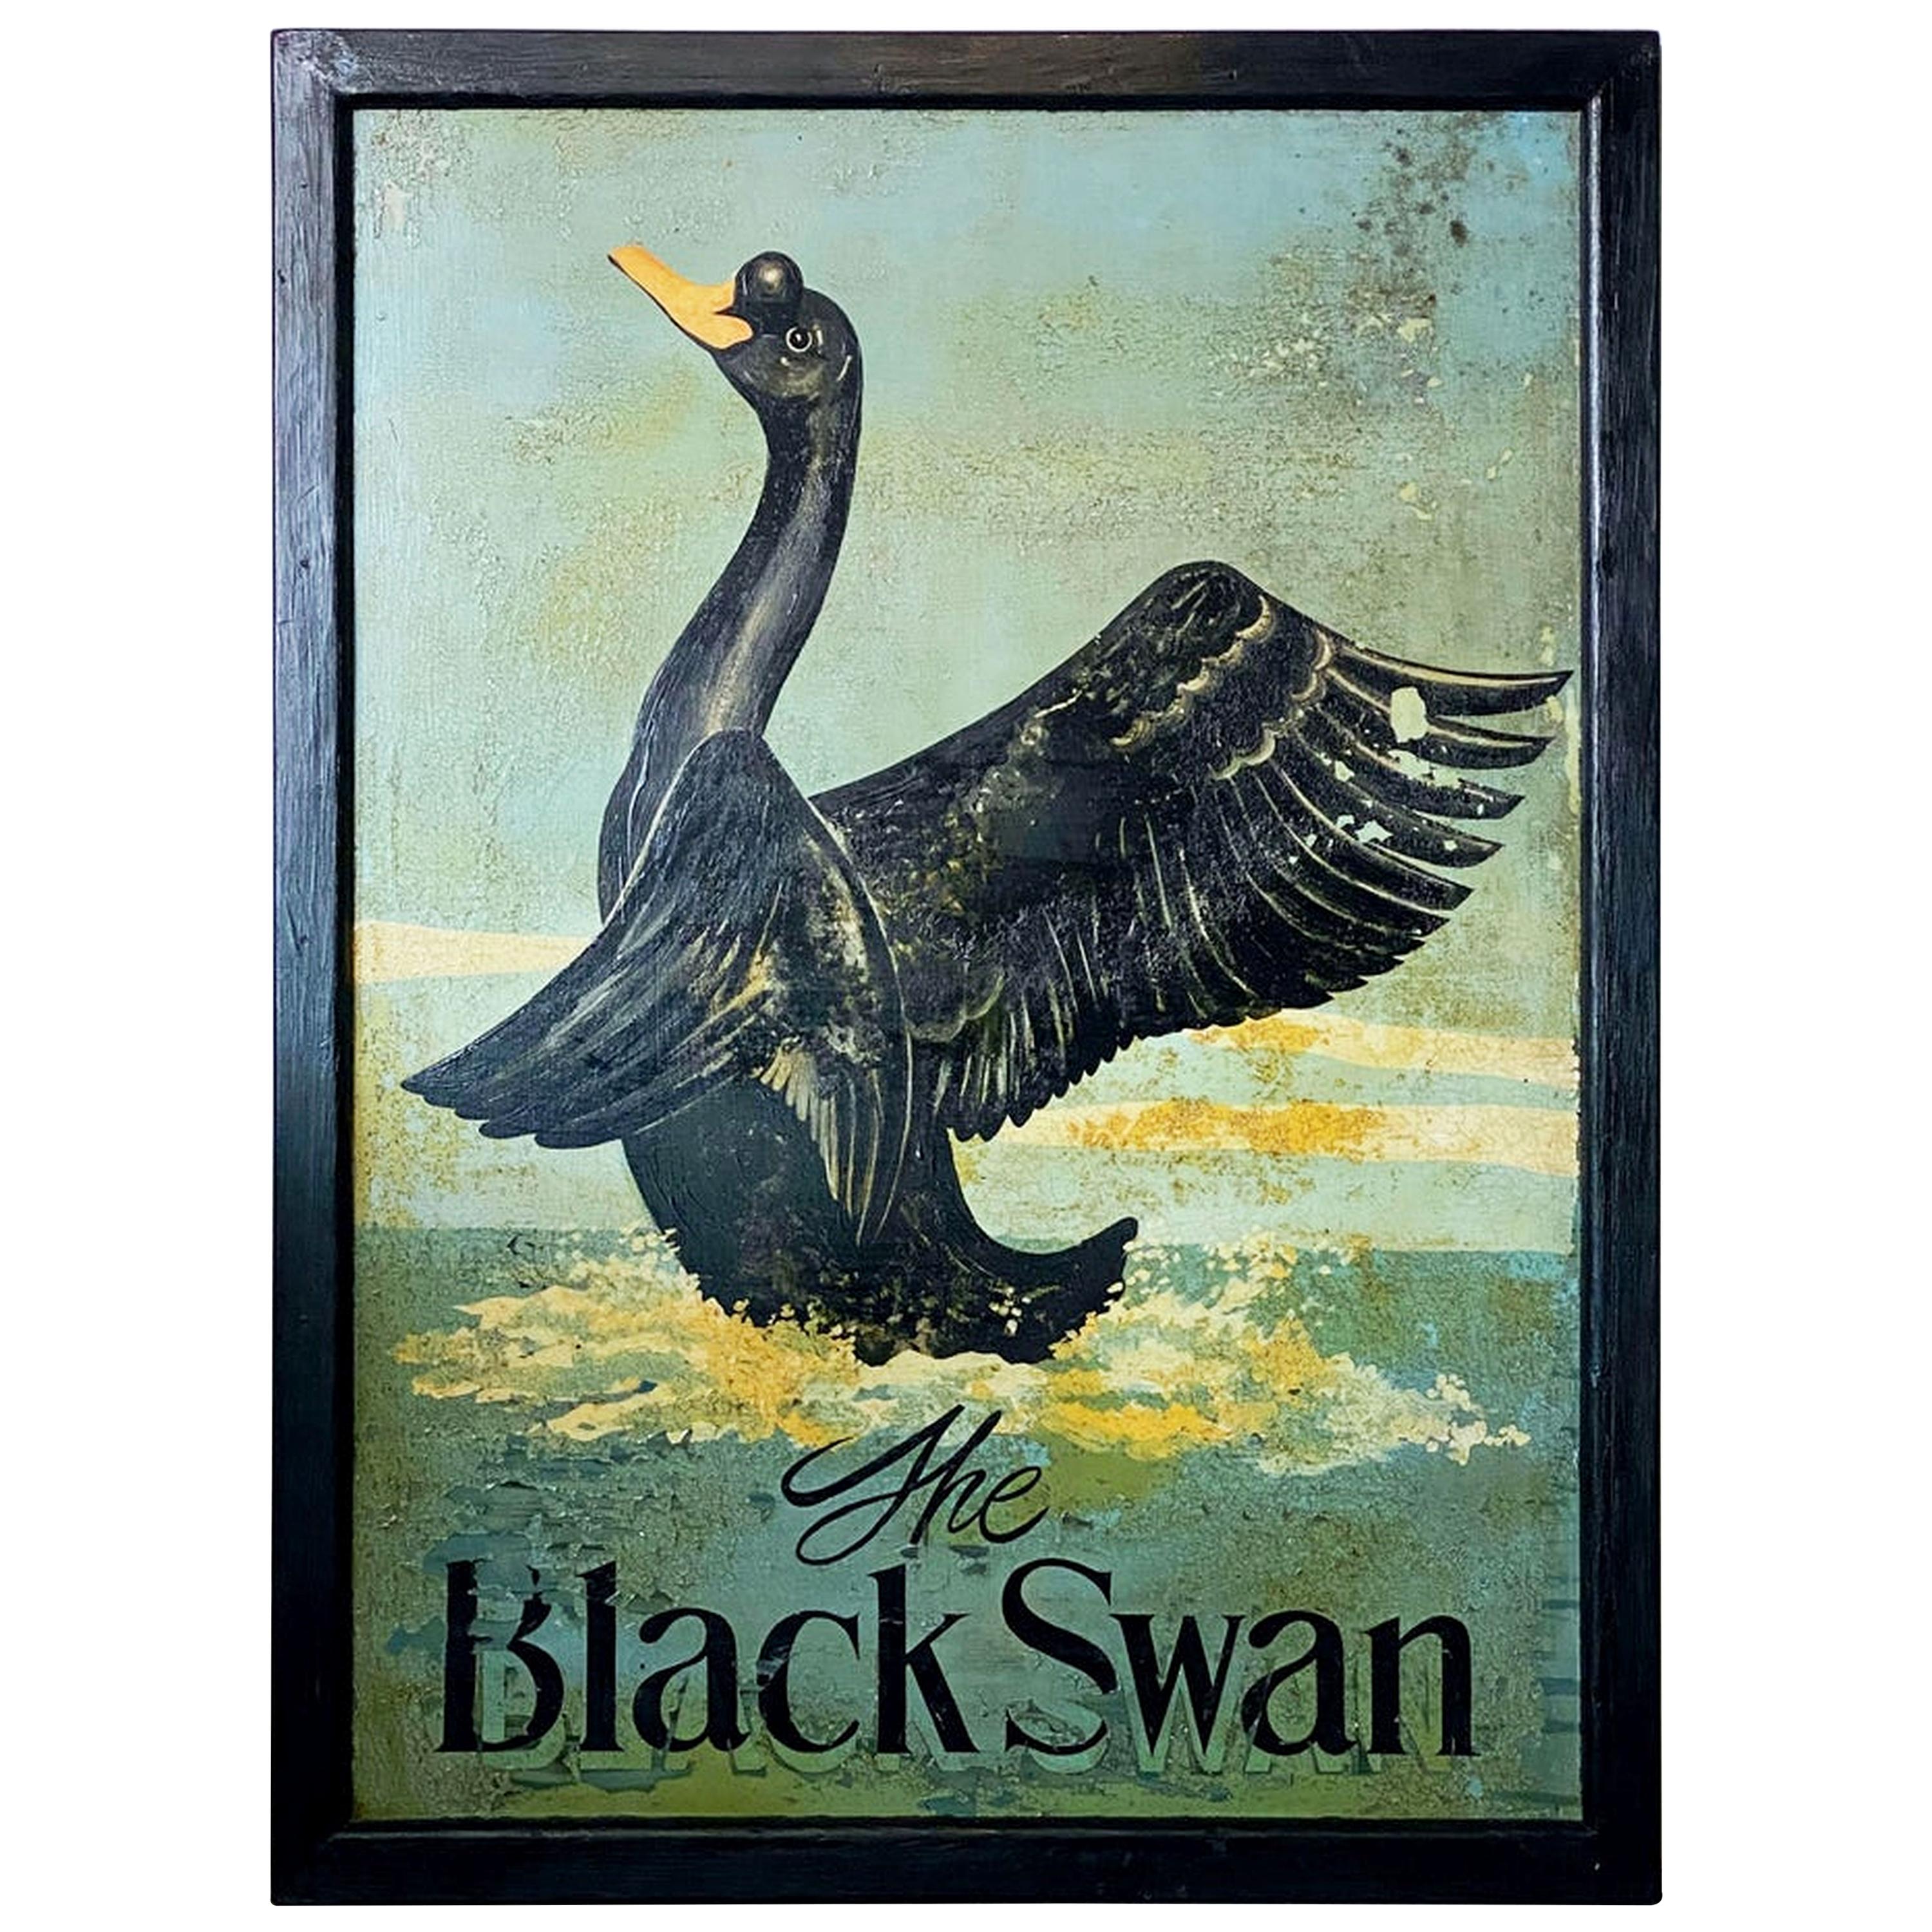 English Pub Sign, "The Black Swan"